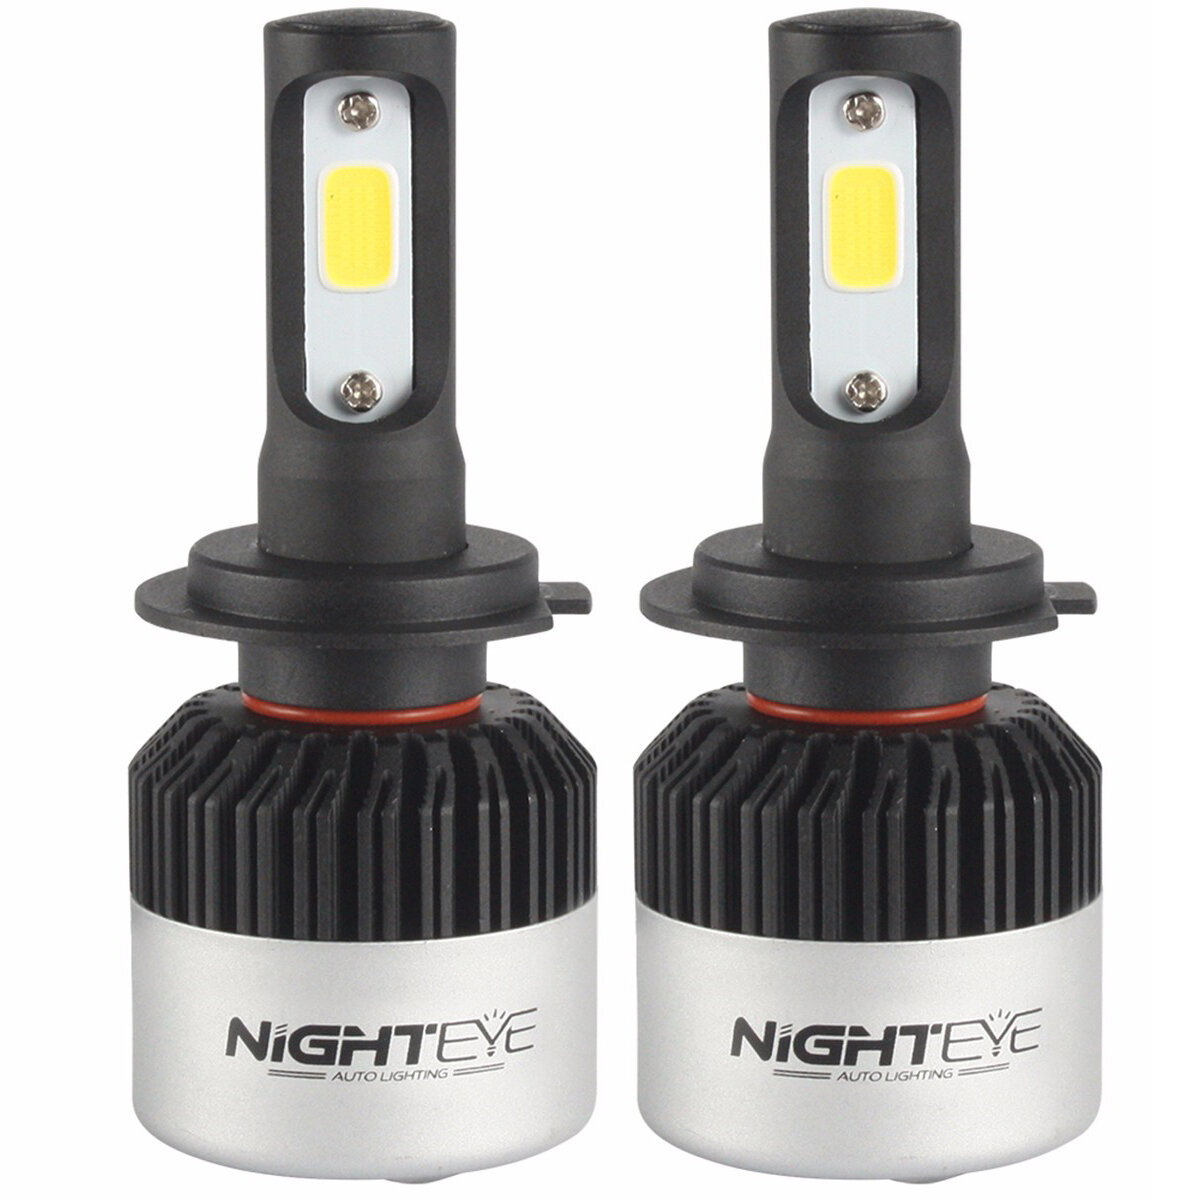 

NightEye 2PCS S2 COB LED Car Headlights Bulbs Fog Light H7 72W 9000LM 6500K White